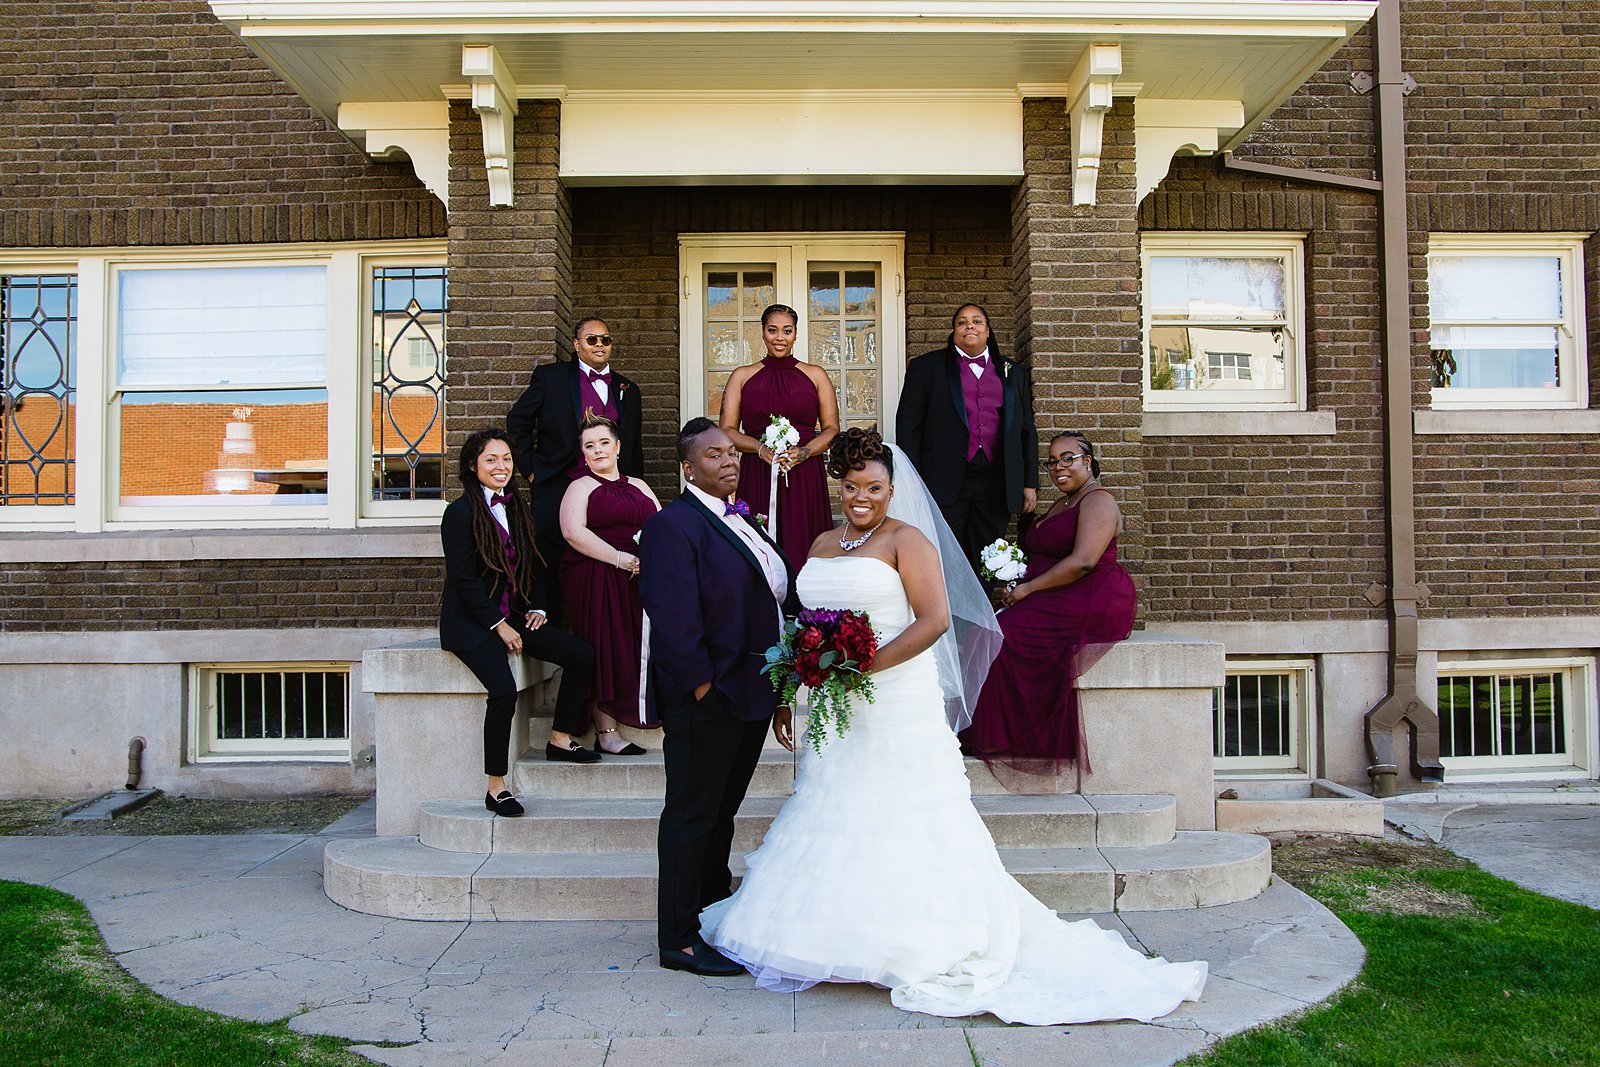 Wedding party together at a Ellis-Shackelford House wedding by Arizona wedding photographer PMA Photography.